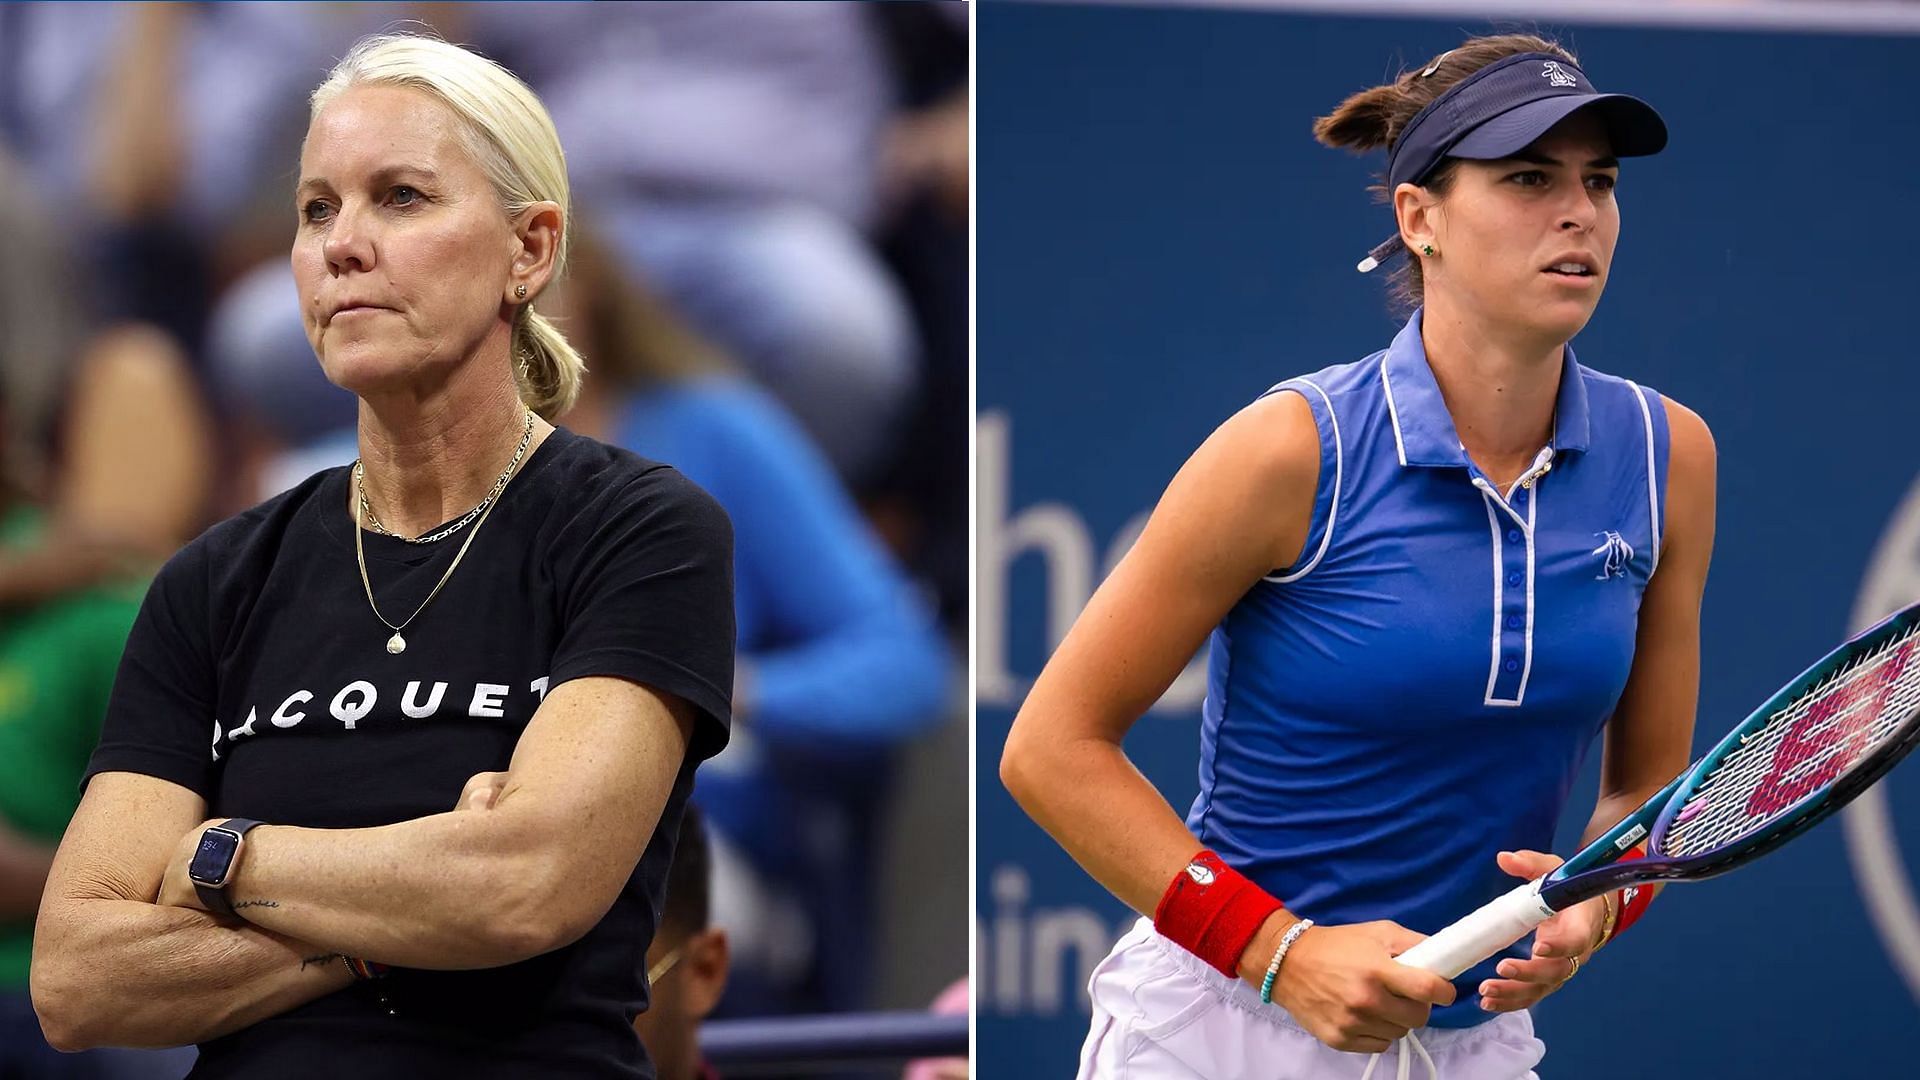 Rennae Stubbs defends Ajla Tomljanovic amid massive ranking drop after Serena Williams win at US open